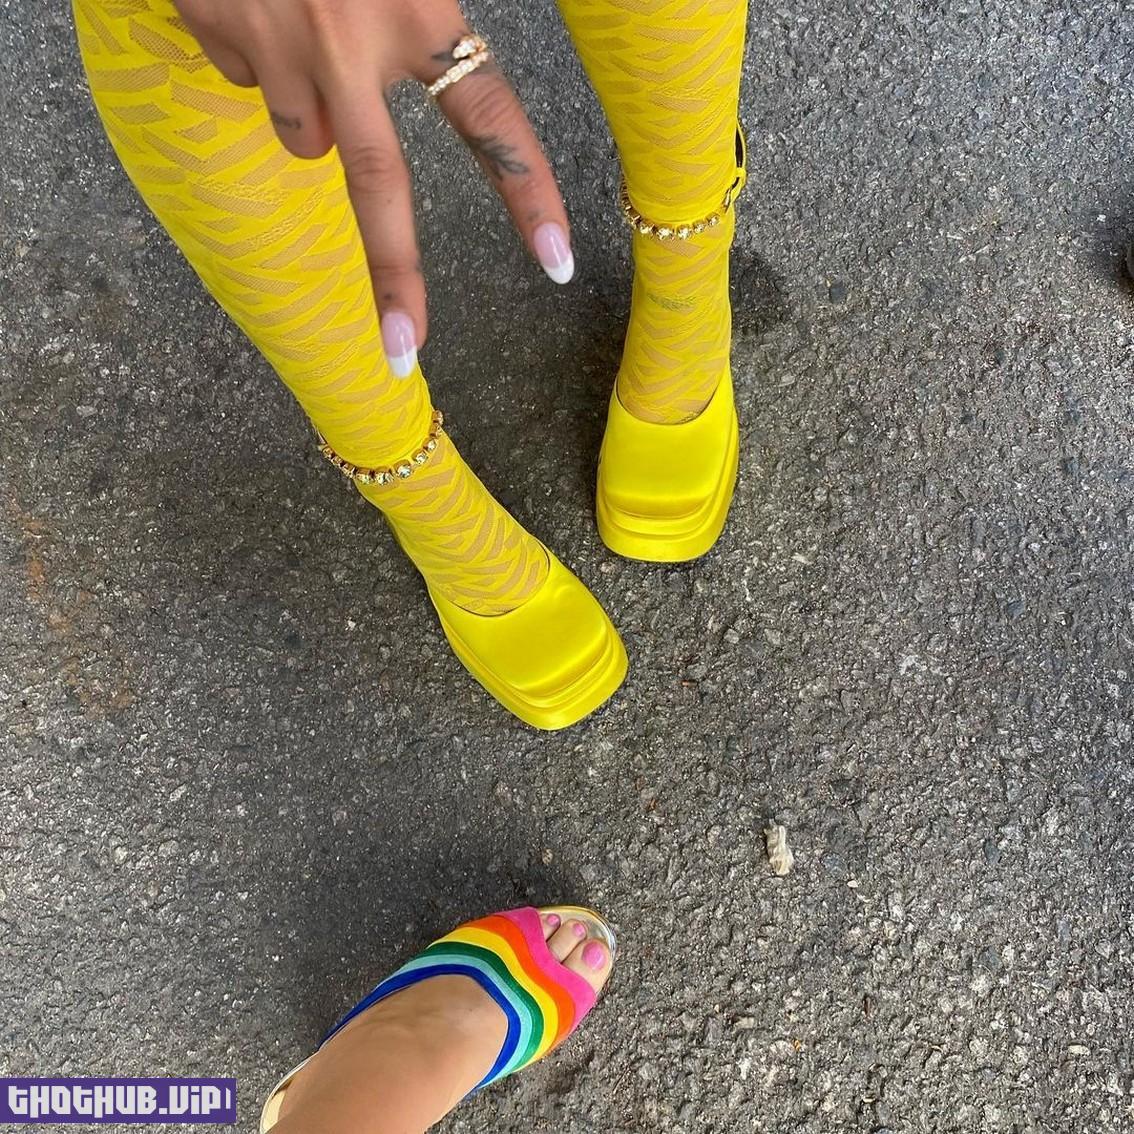 Ariana Grande Hot In Yellow Dress 4 Photos